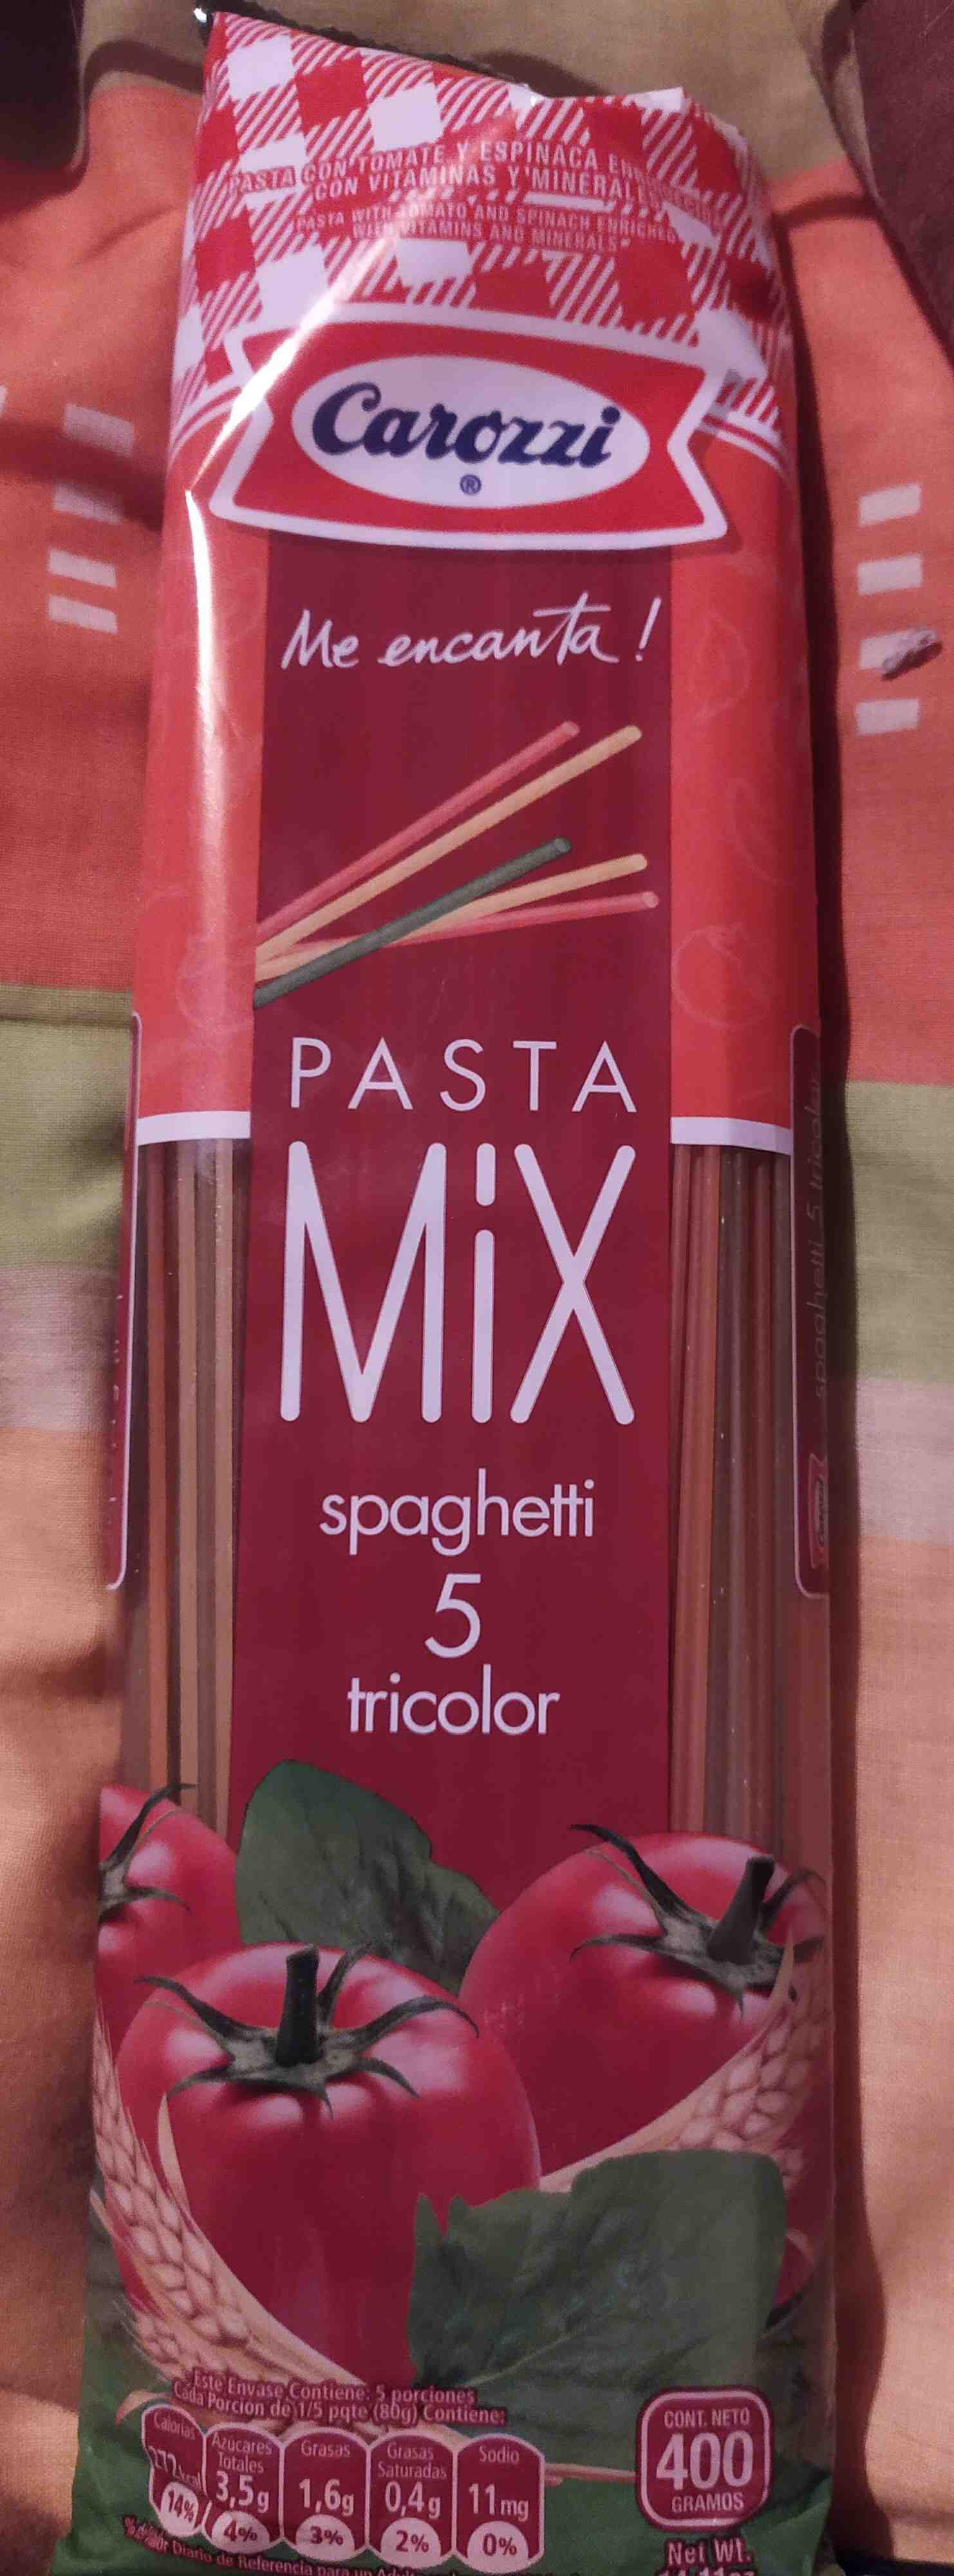 pasta mix - Producto - en